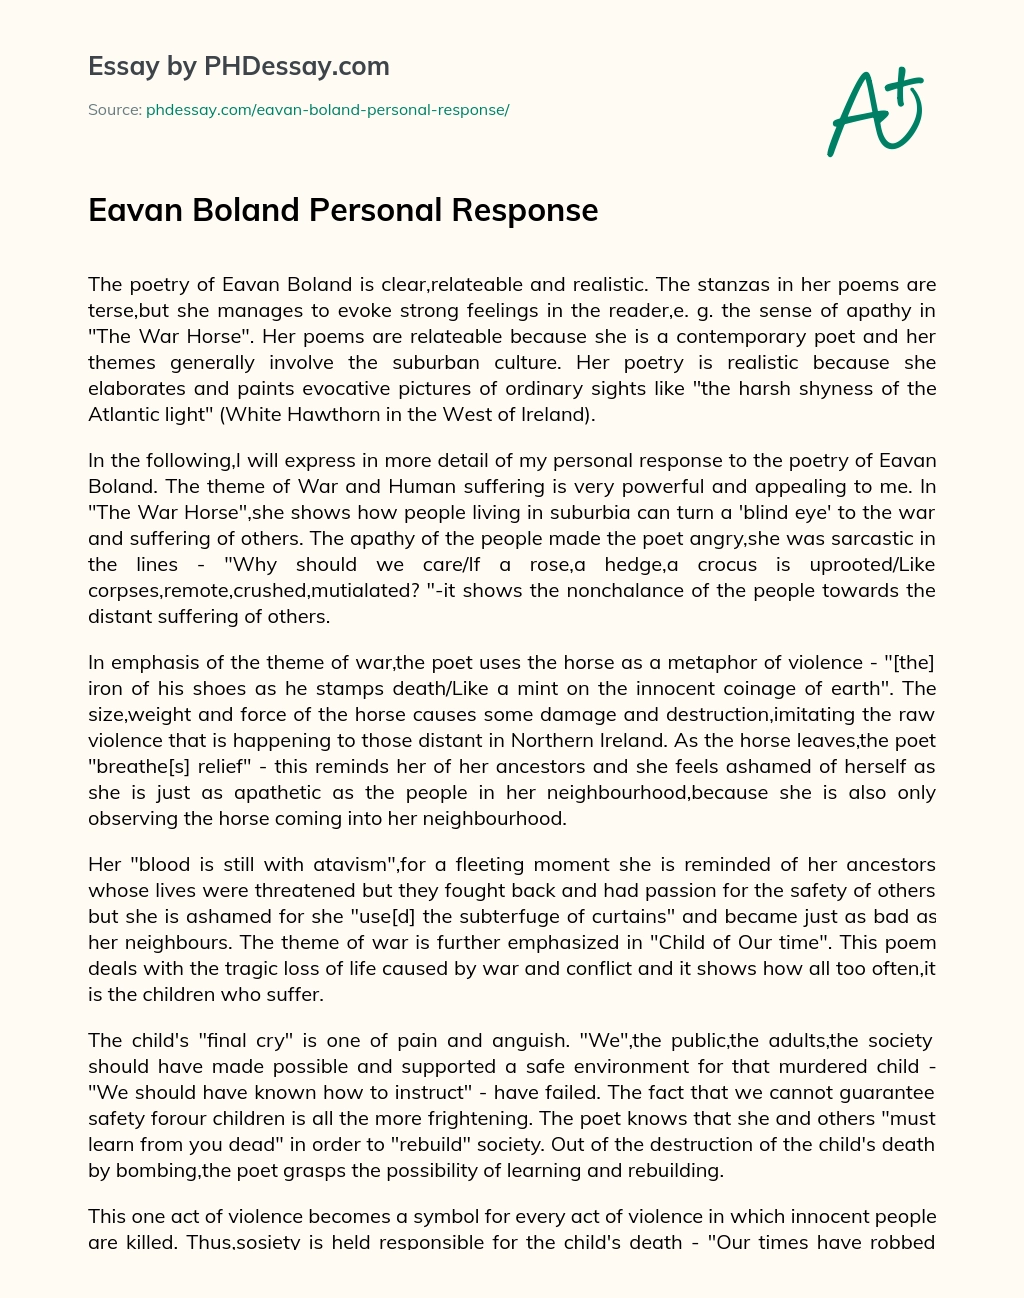 Eavan Boland Personal Response essay